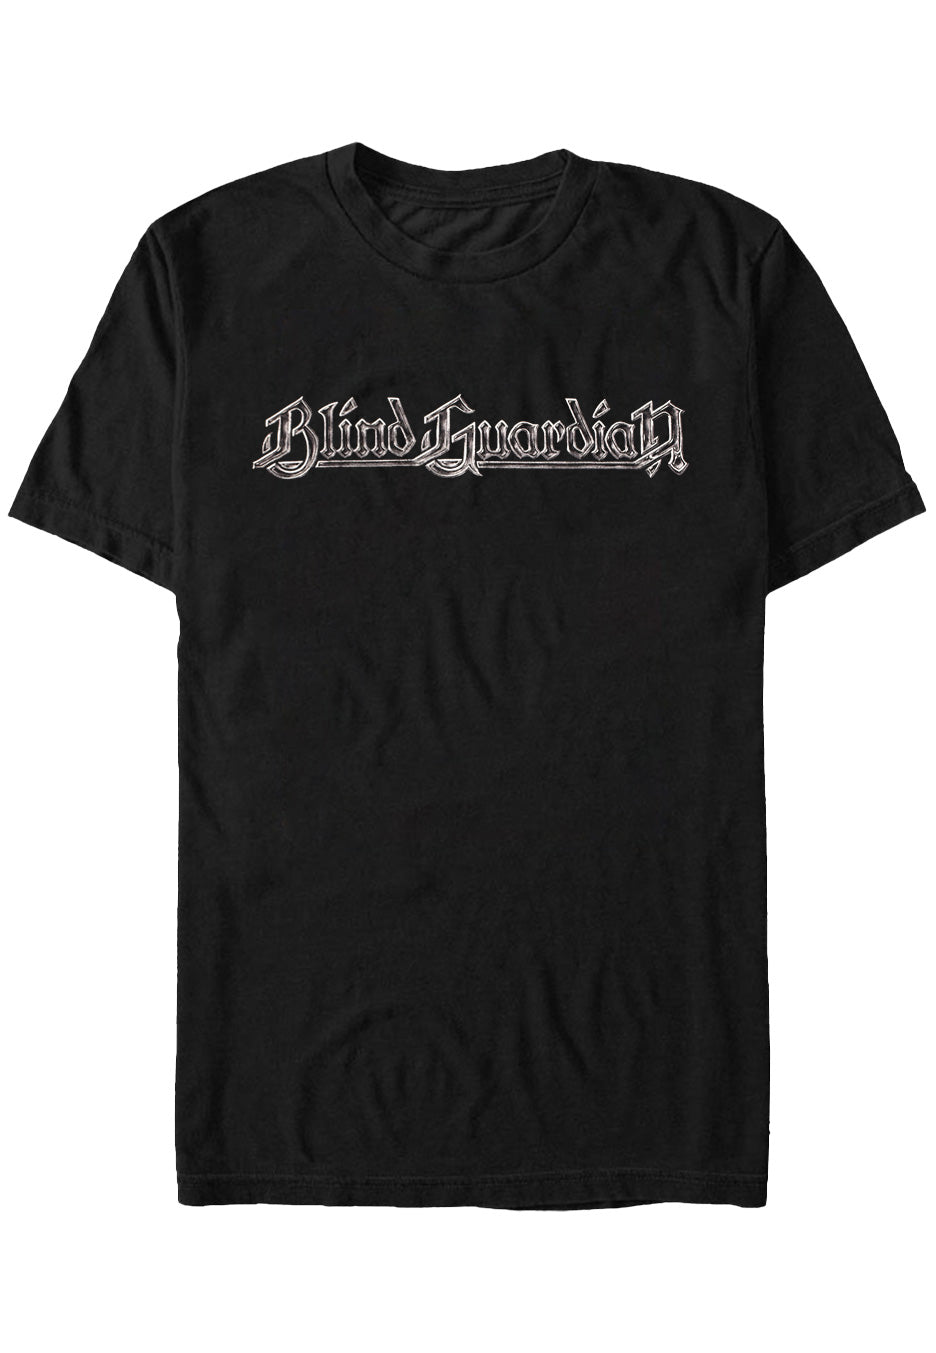 Blind Guardian - Logo Tour 2015/2016 Black/White Ringer - T-Shirt